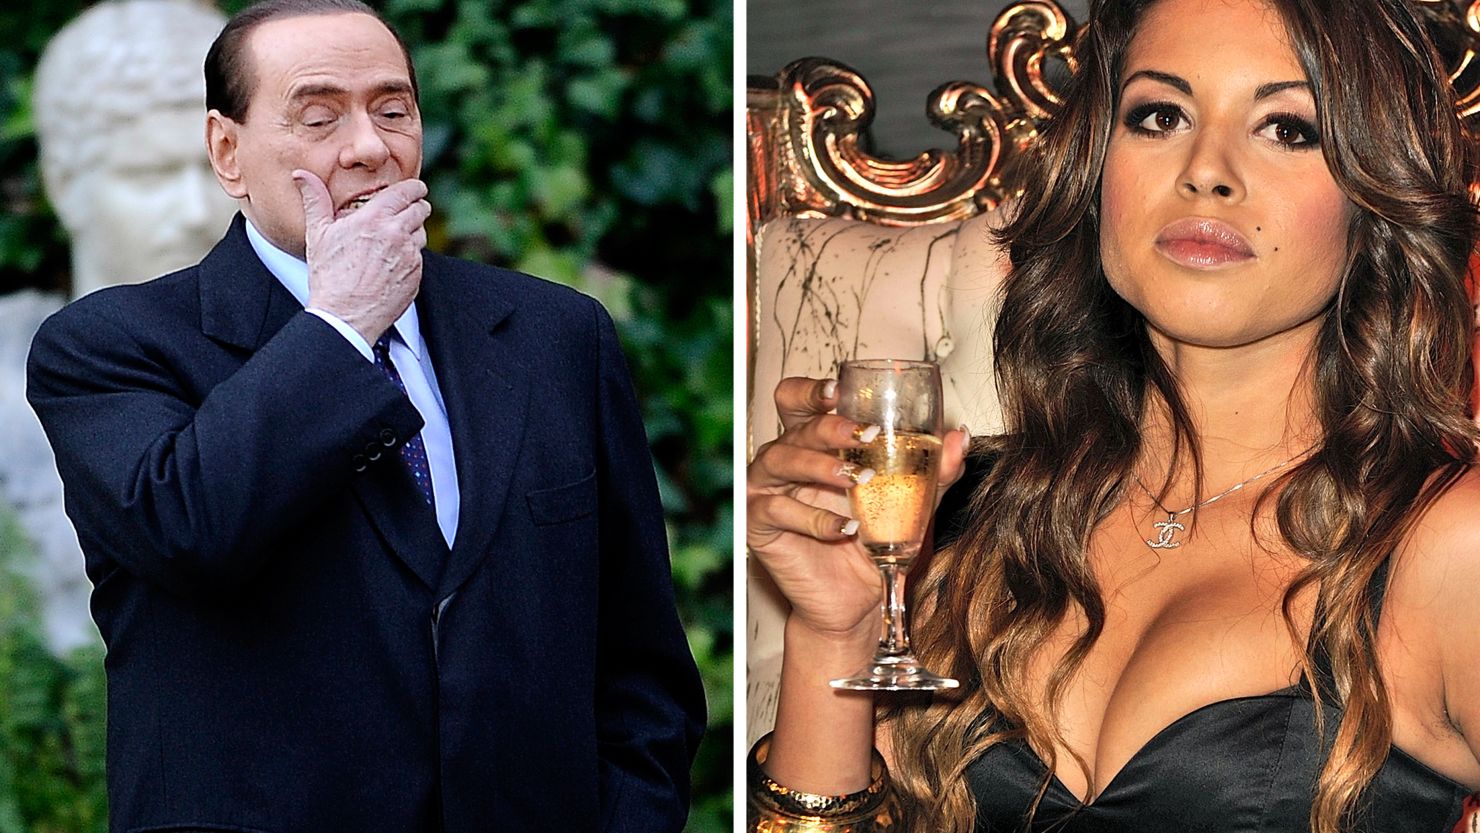 Former Italian Prime Minister Silvio Berlusconi is accused of sleeping with then-underage dancer Karima El Mahroug.